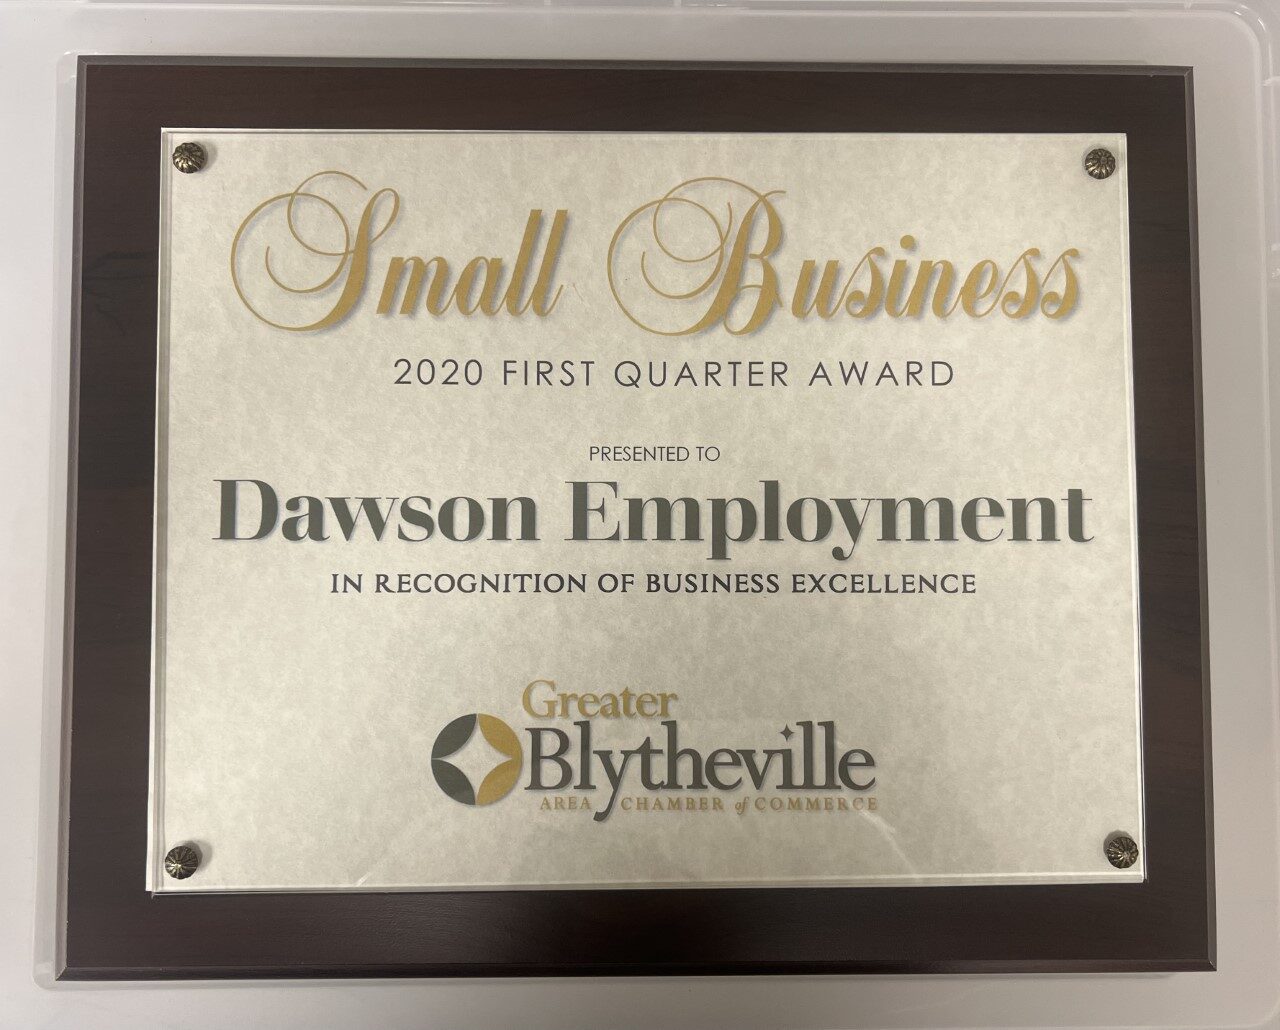 Small Business First Quarter Award to Dawson Employment